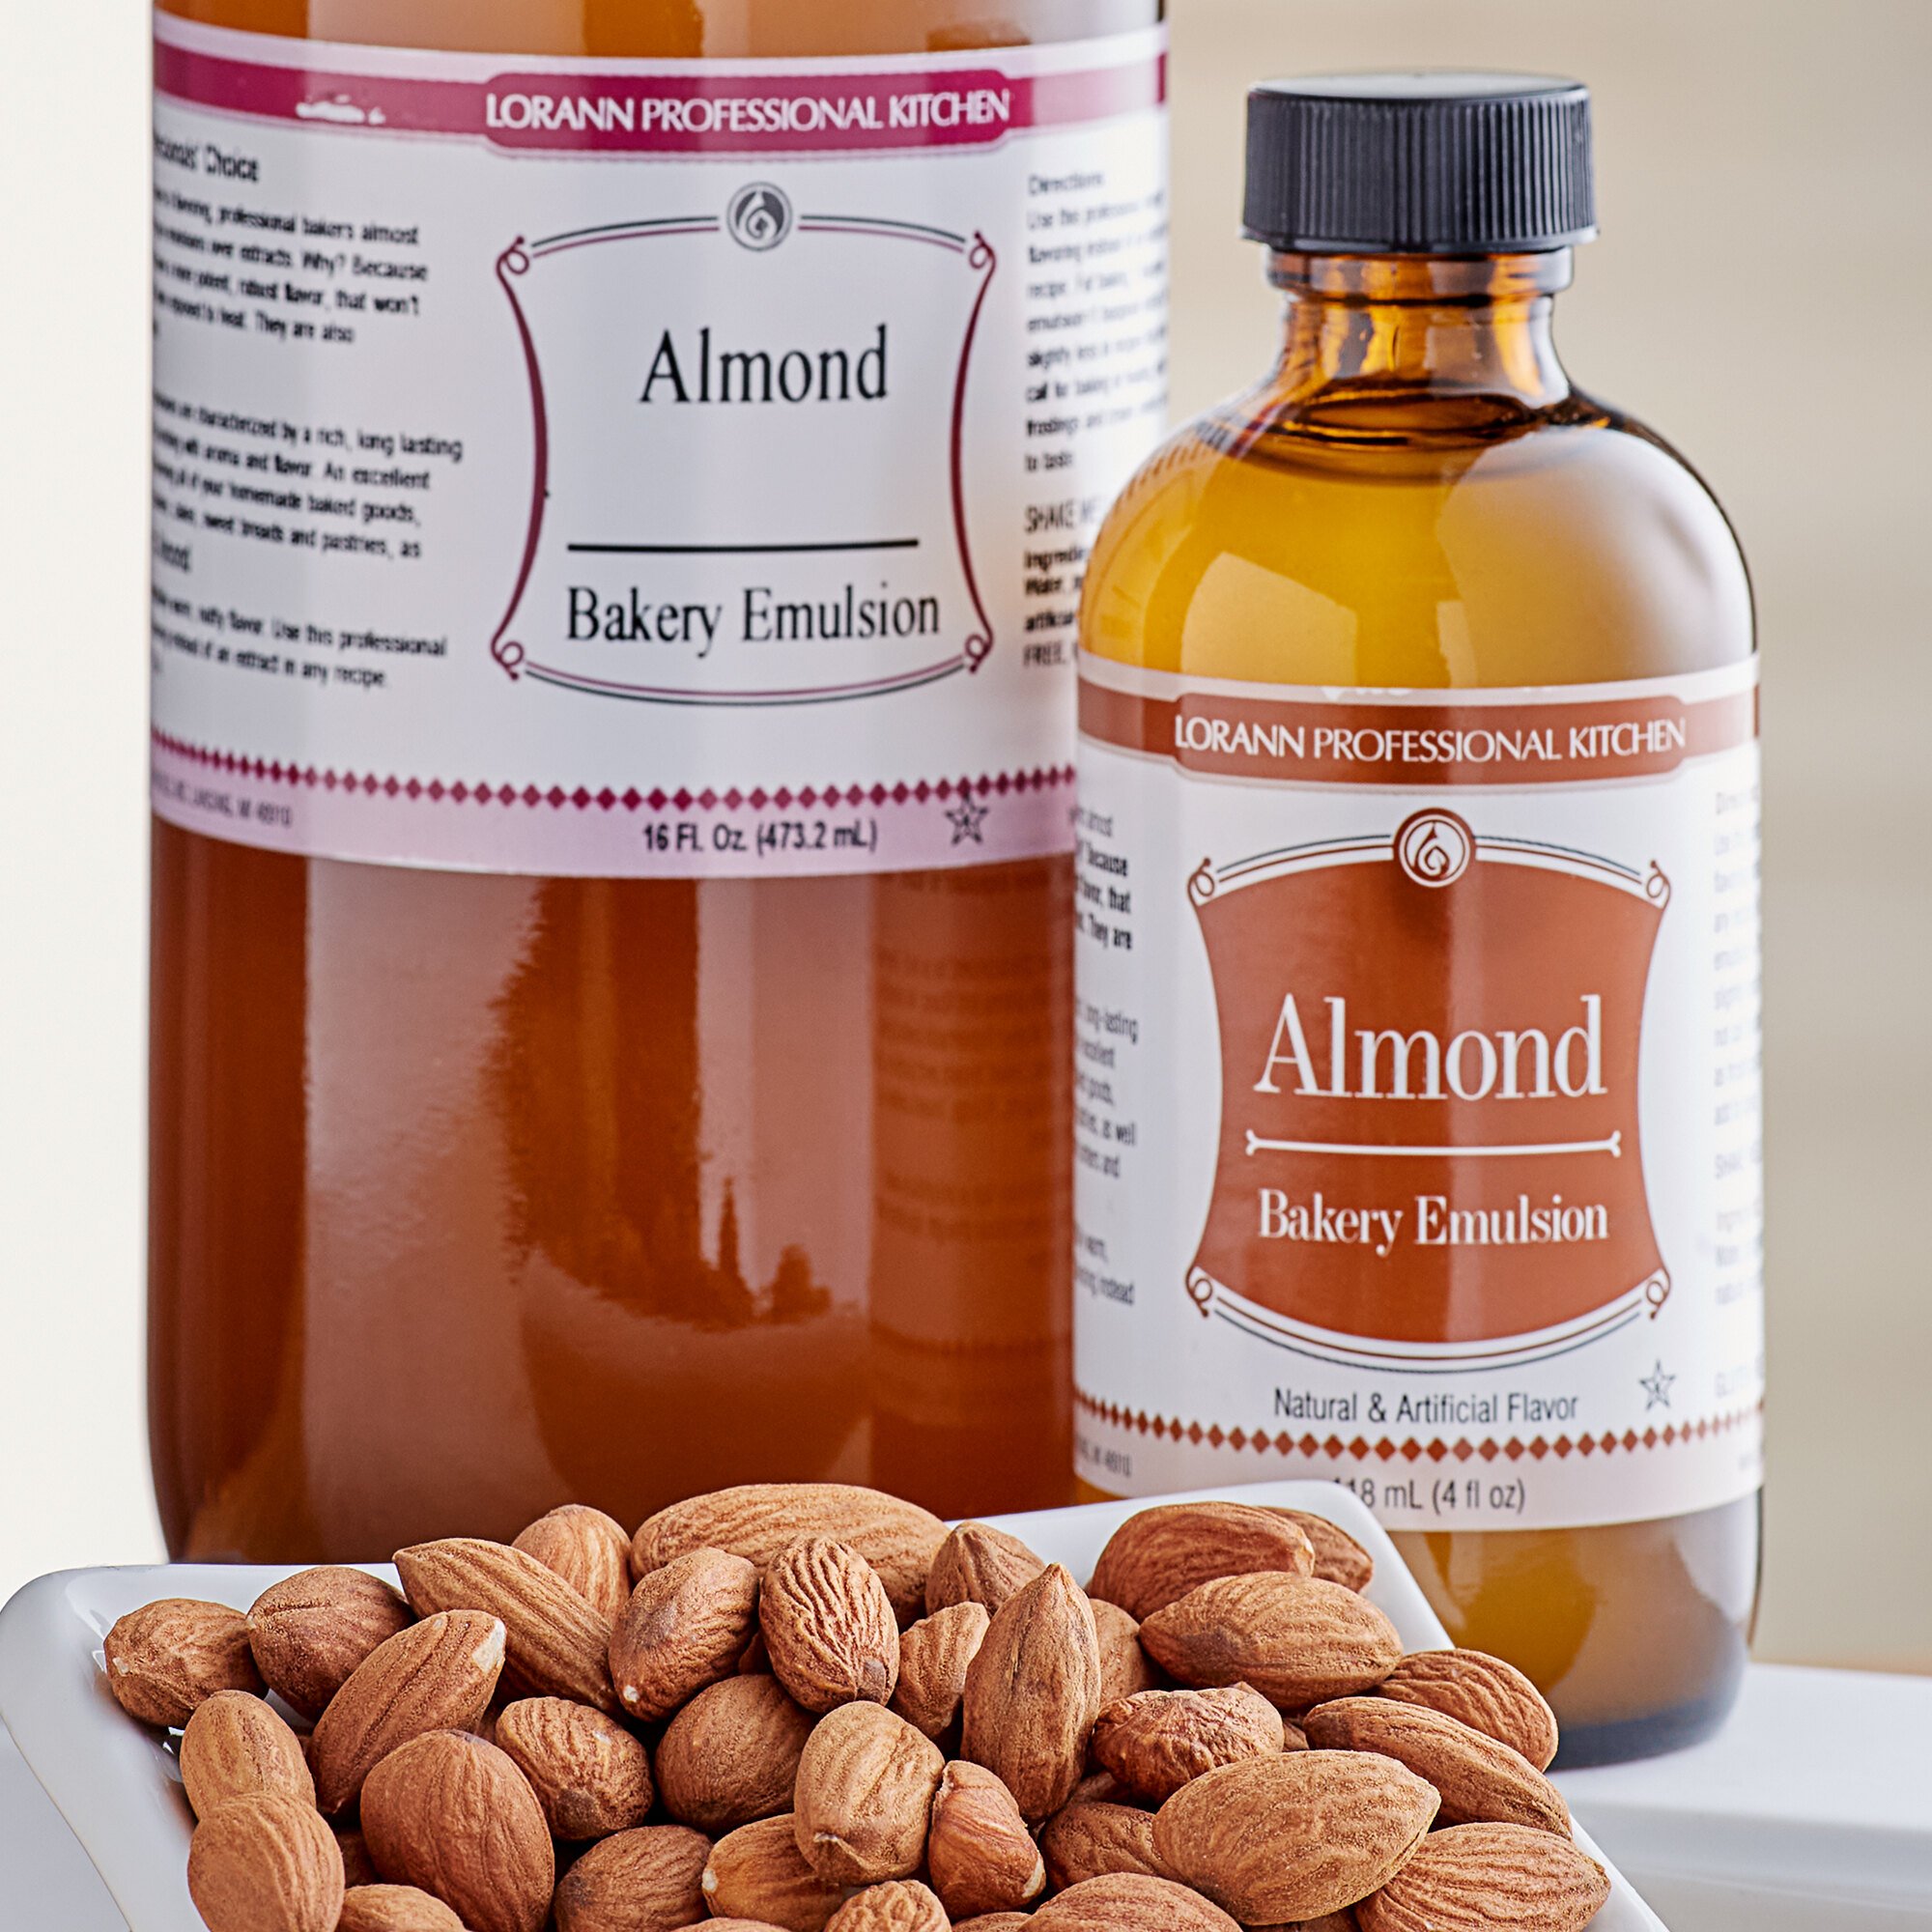 almond bakery emulsion ingredeint list lorann